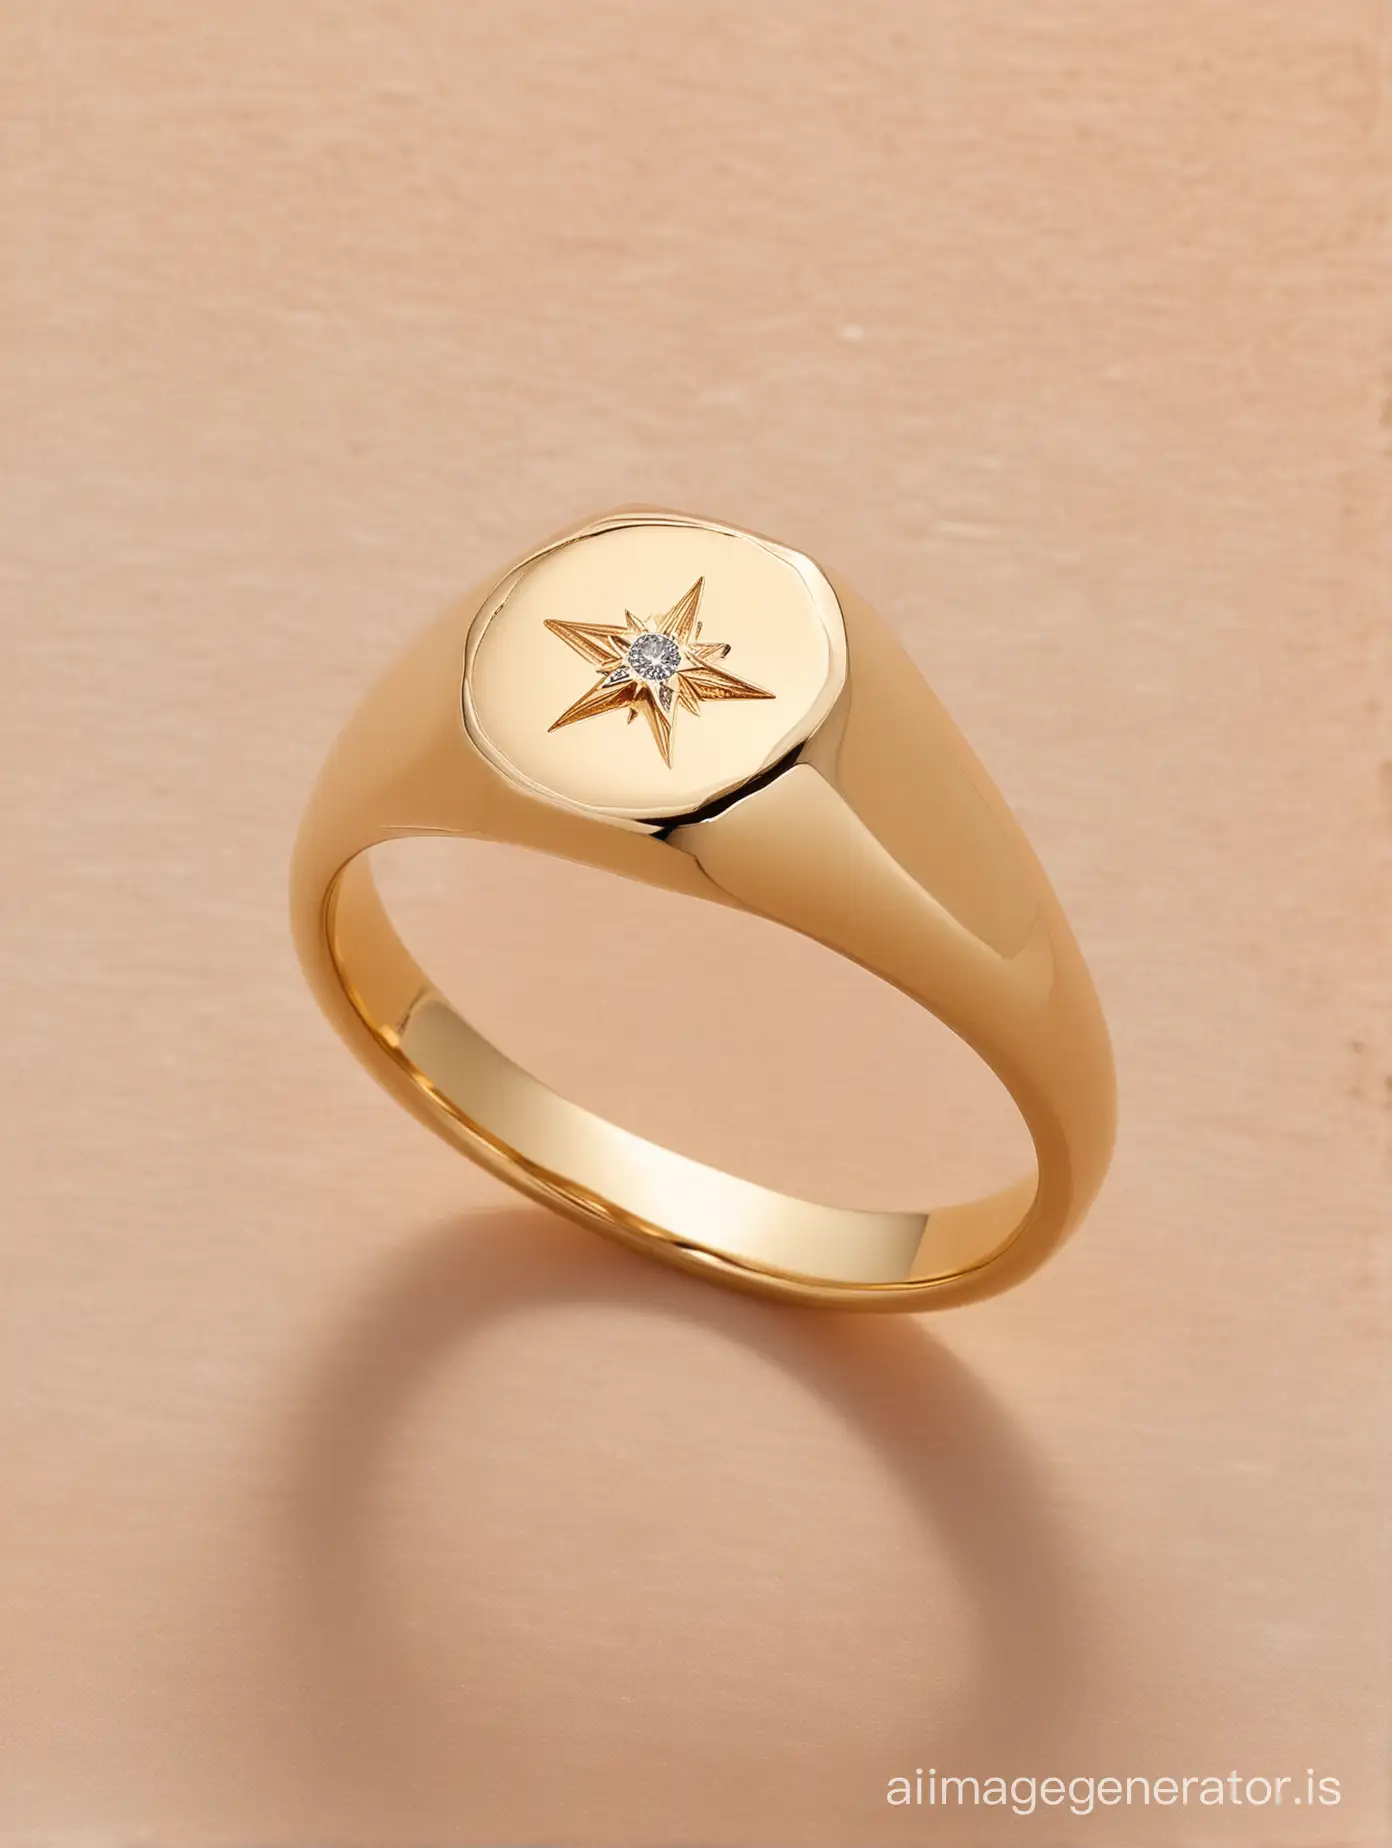 Elegant-Gold-Signet-Ring-with-Central-Diamond-Star-Pastel-Sunset-Background